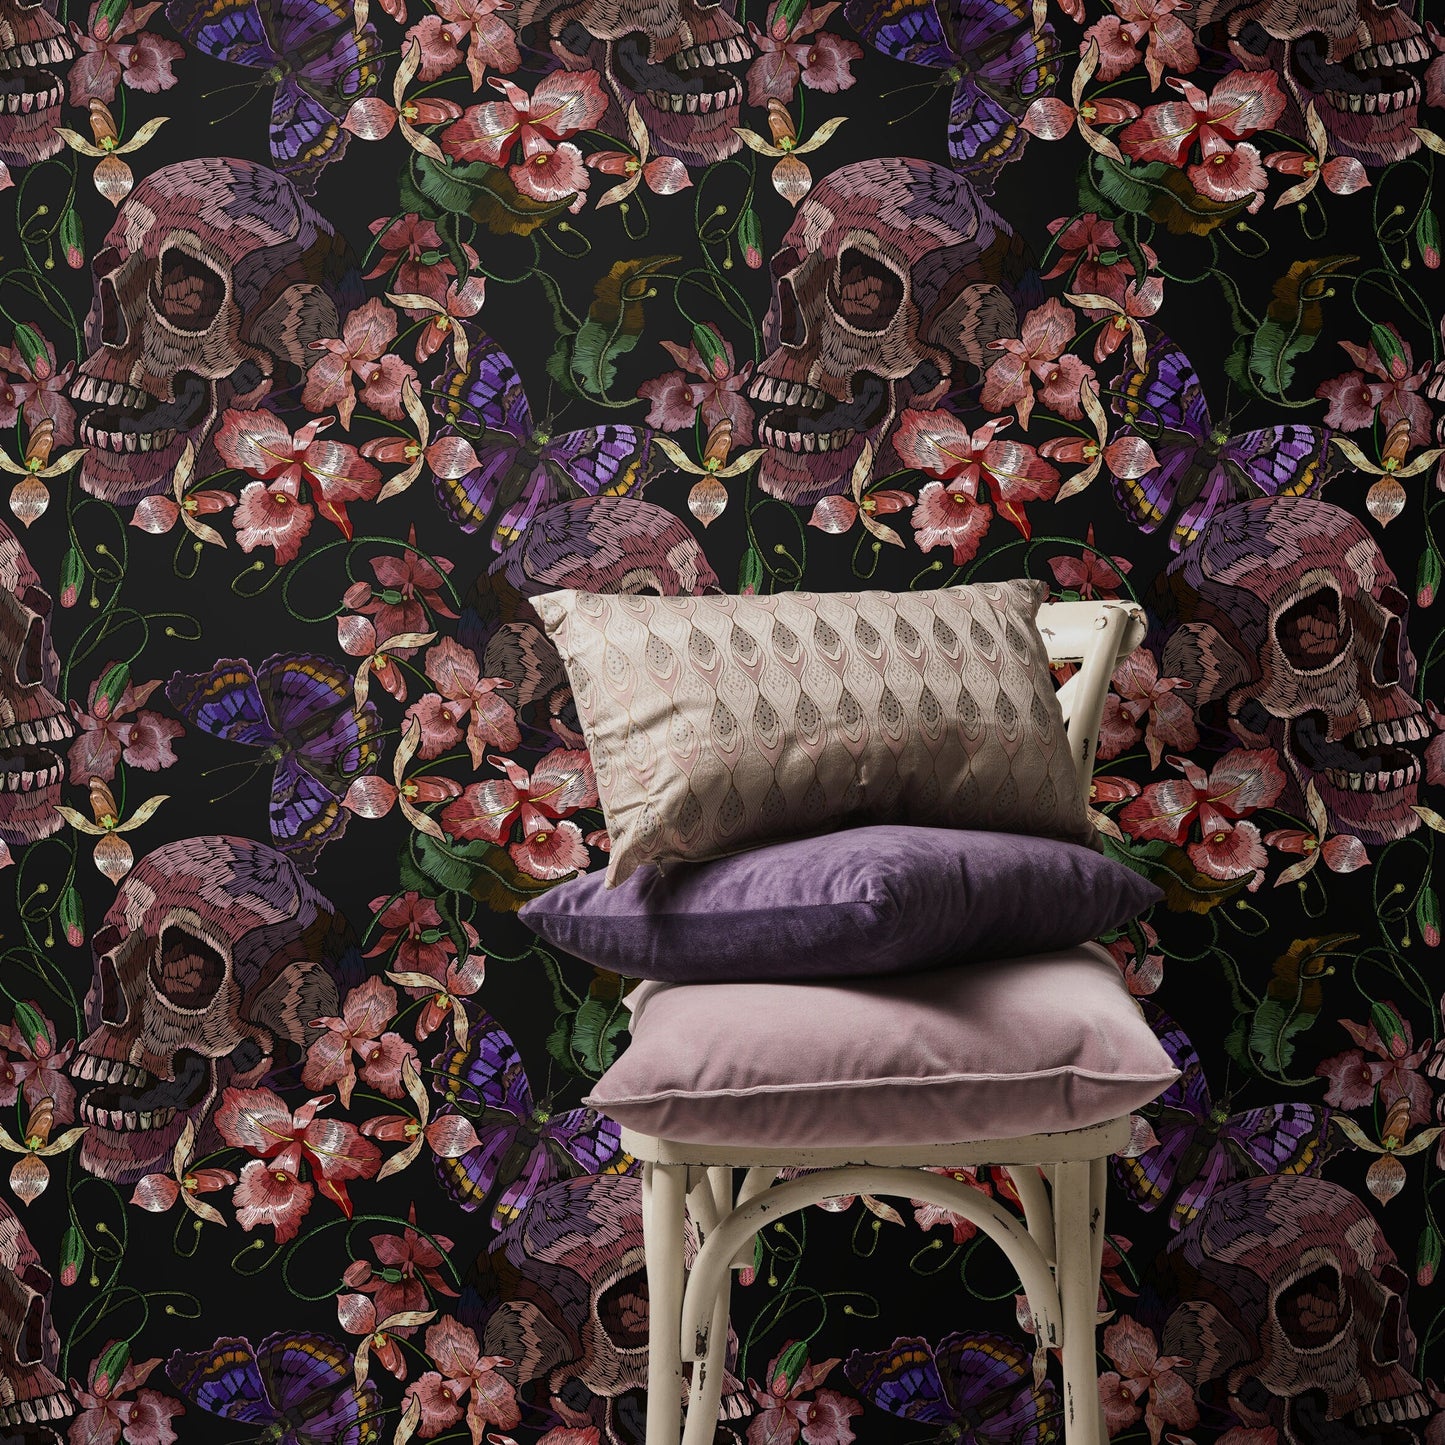 Skull and Butterfly Wallpaper Dark Floral Wallpaper Peel and Stick and Traditional Wallpaper - D898